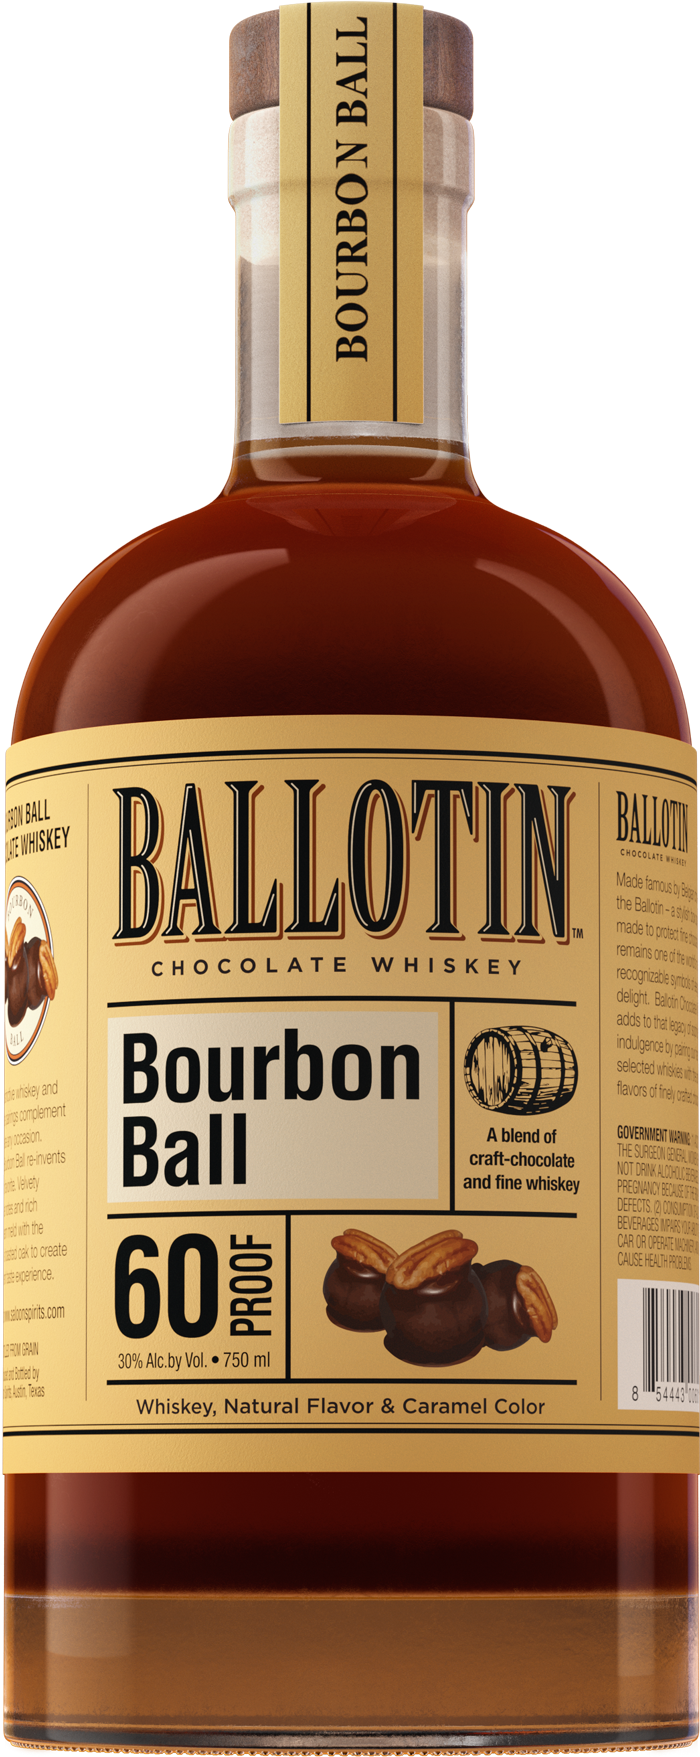 Buy Ballotin Bourbon Ball Chocolate Whiskey Online -Craft City